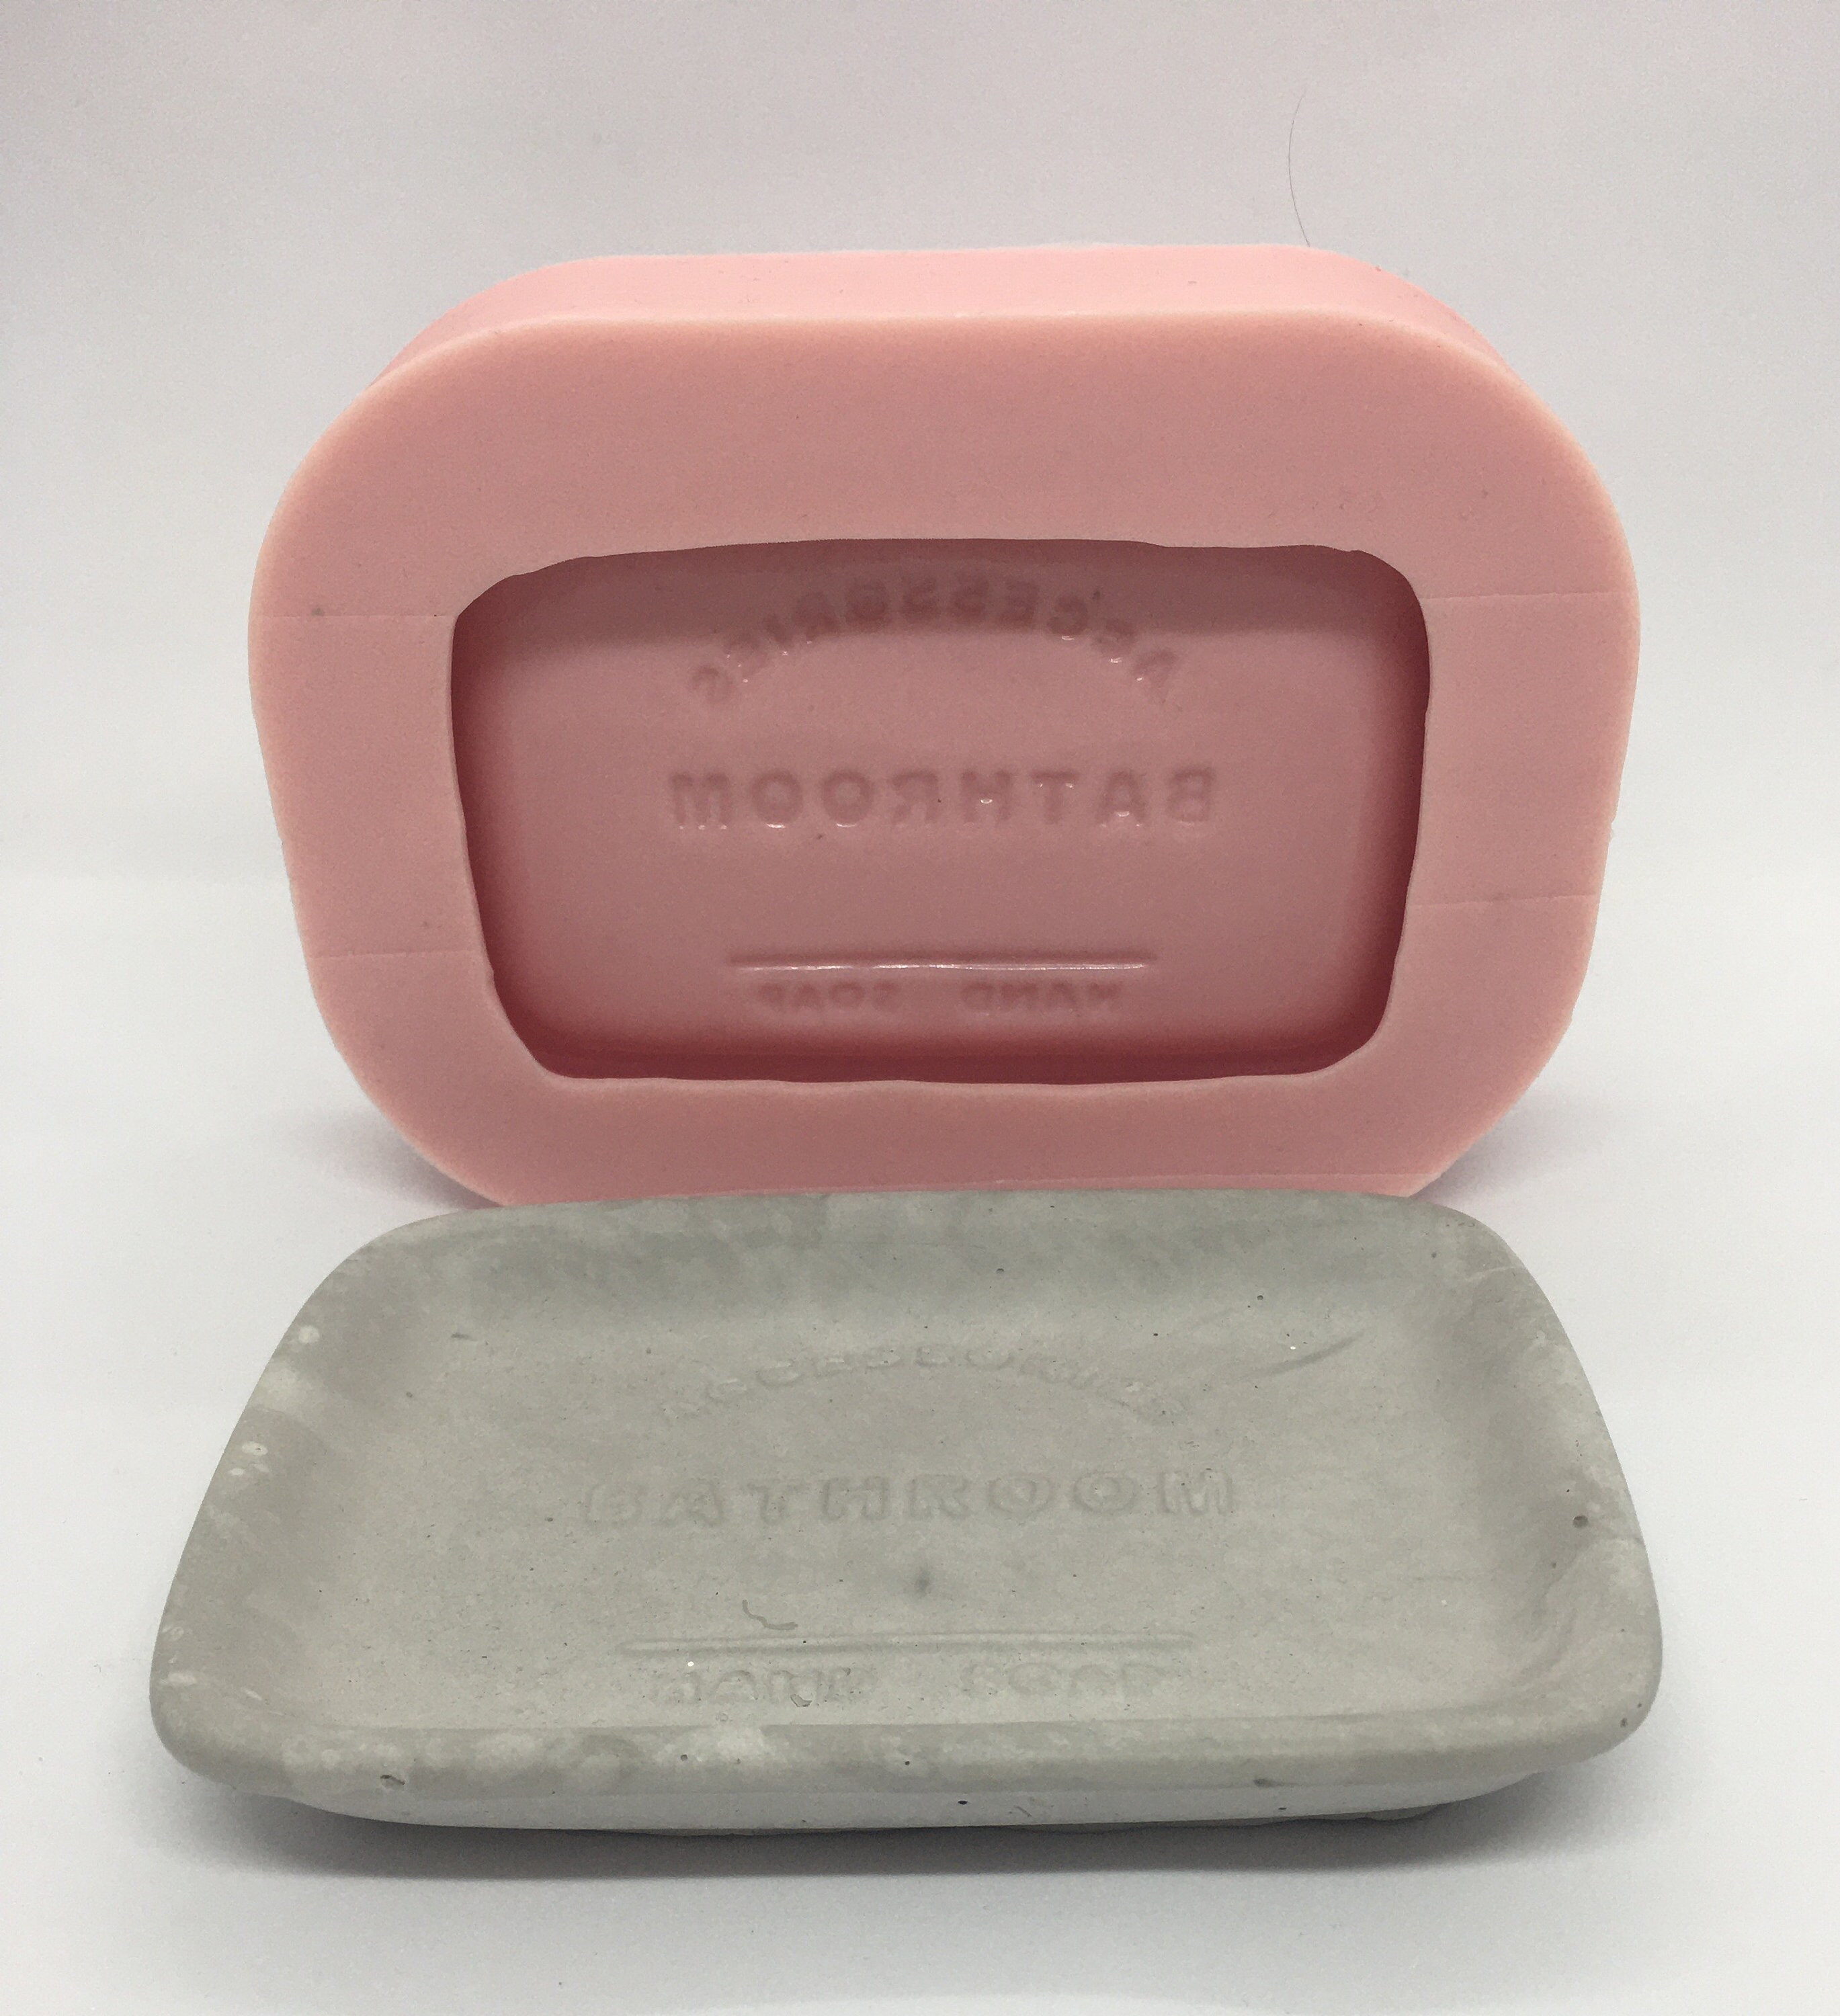 ANHTCZYX Soap Tray Casting Mould Soap Holder UV Resin Mold Handmade Soap Box Silicone Mold Soap Dish Epoxy DIY Crafts Resin Mold, 3-Piece Set